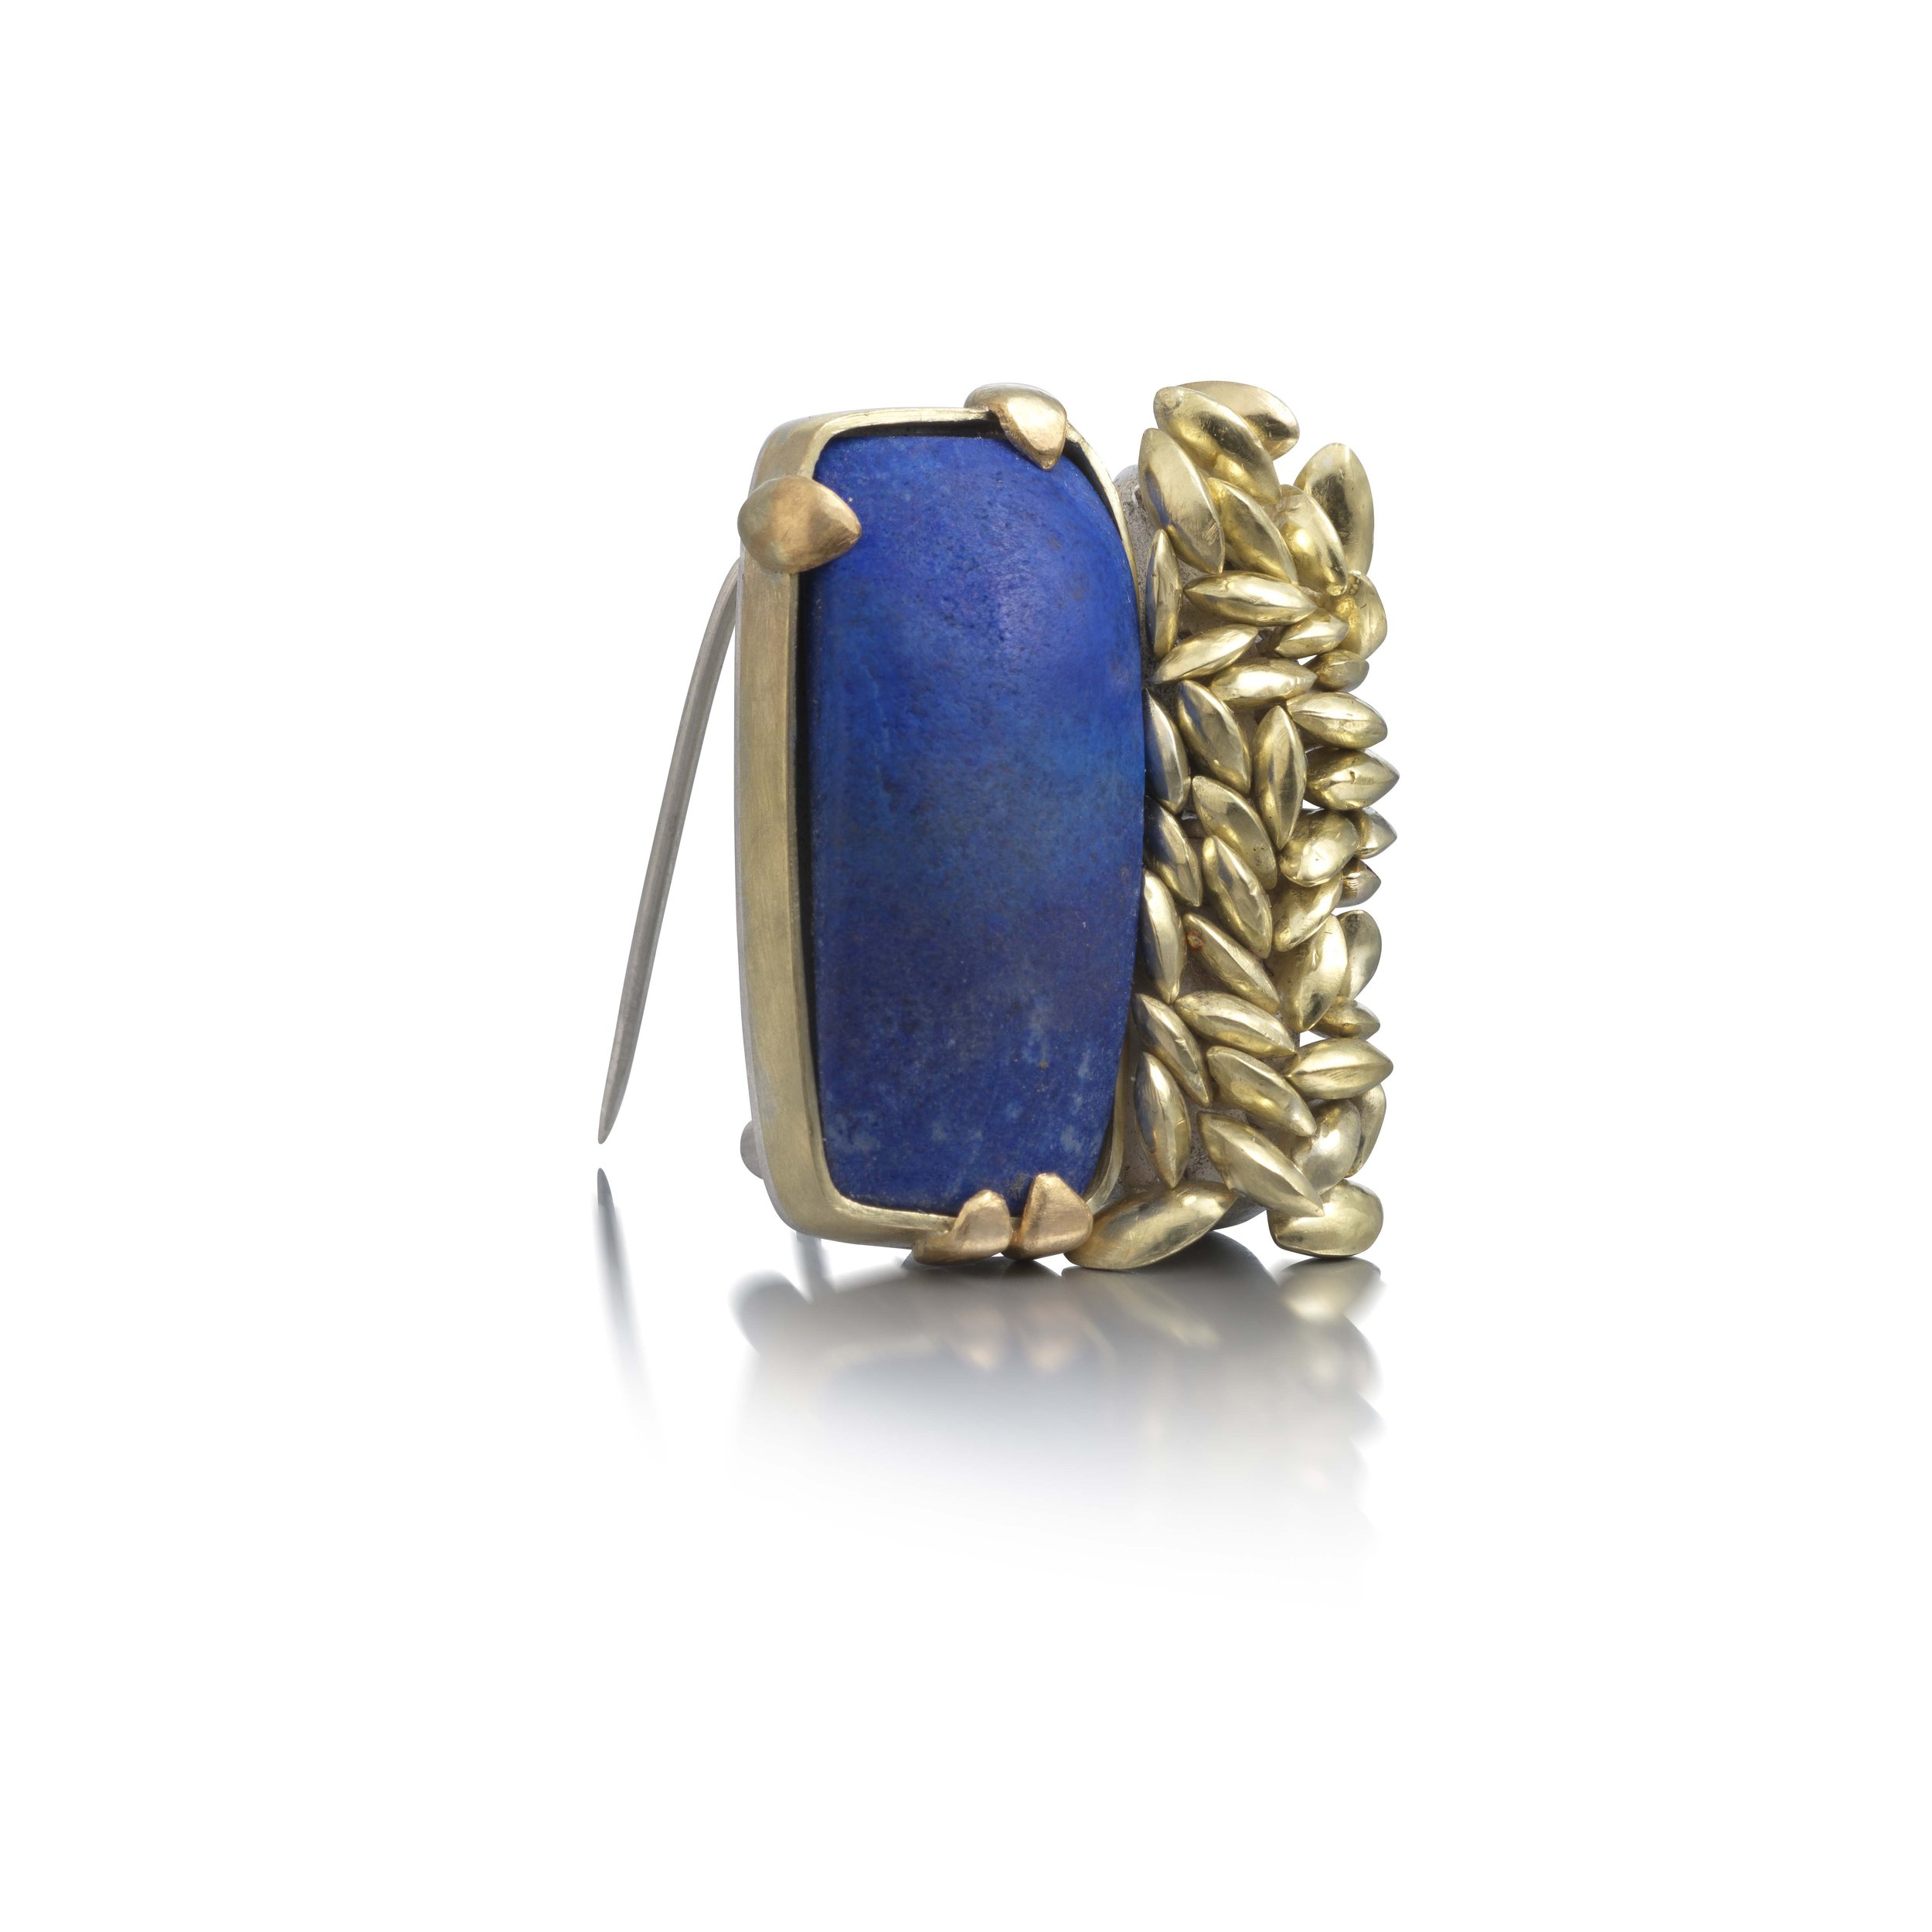 Acini gold and lapis lazuli brooch